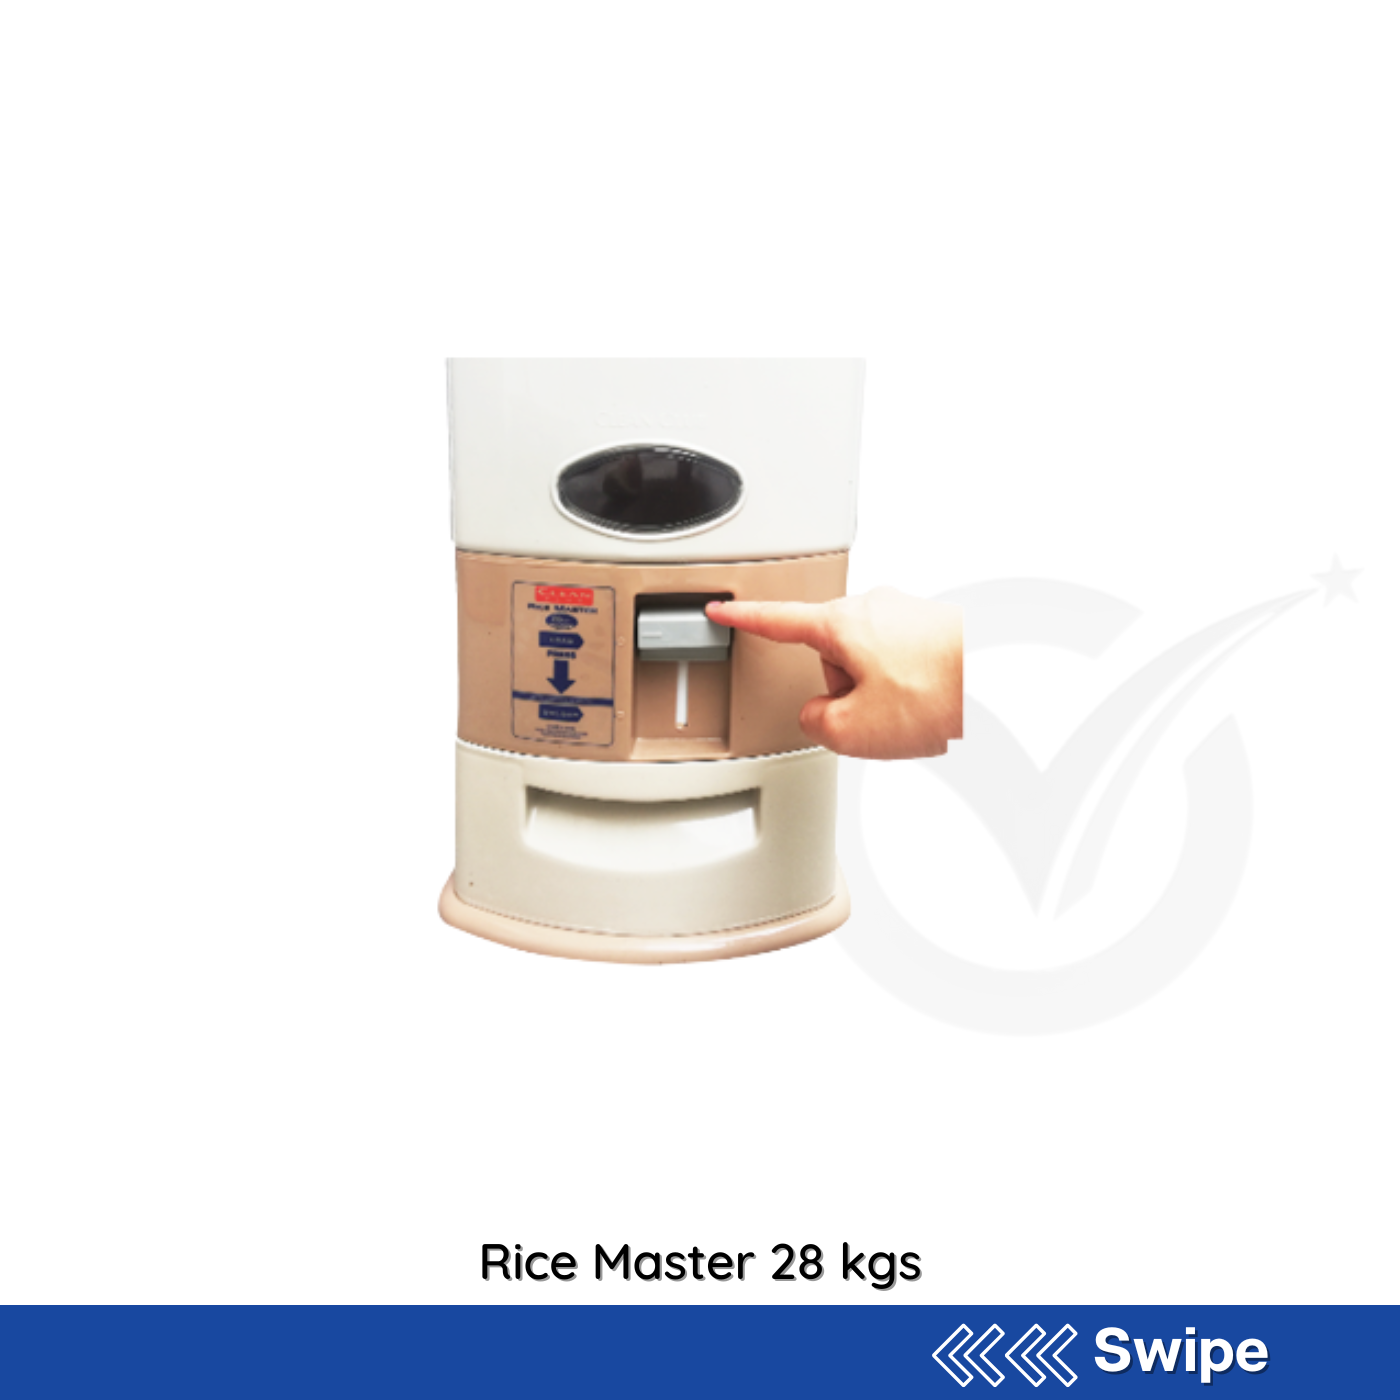 Rice Master 28 kgs